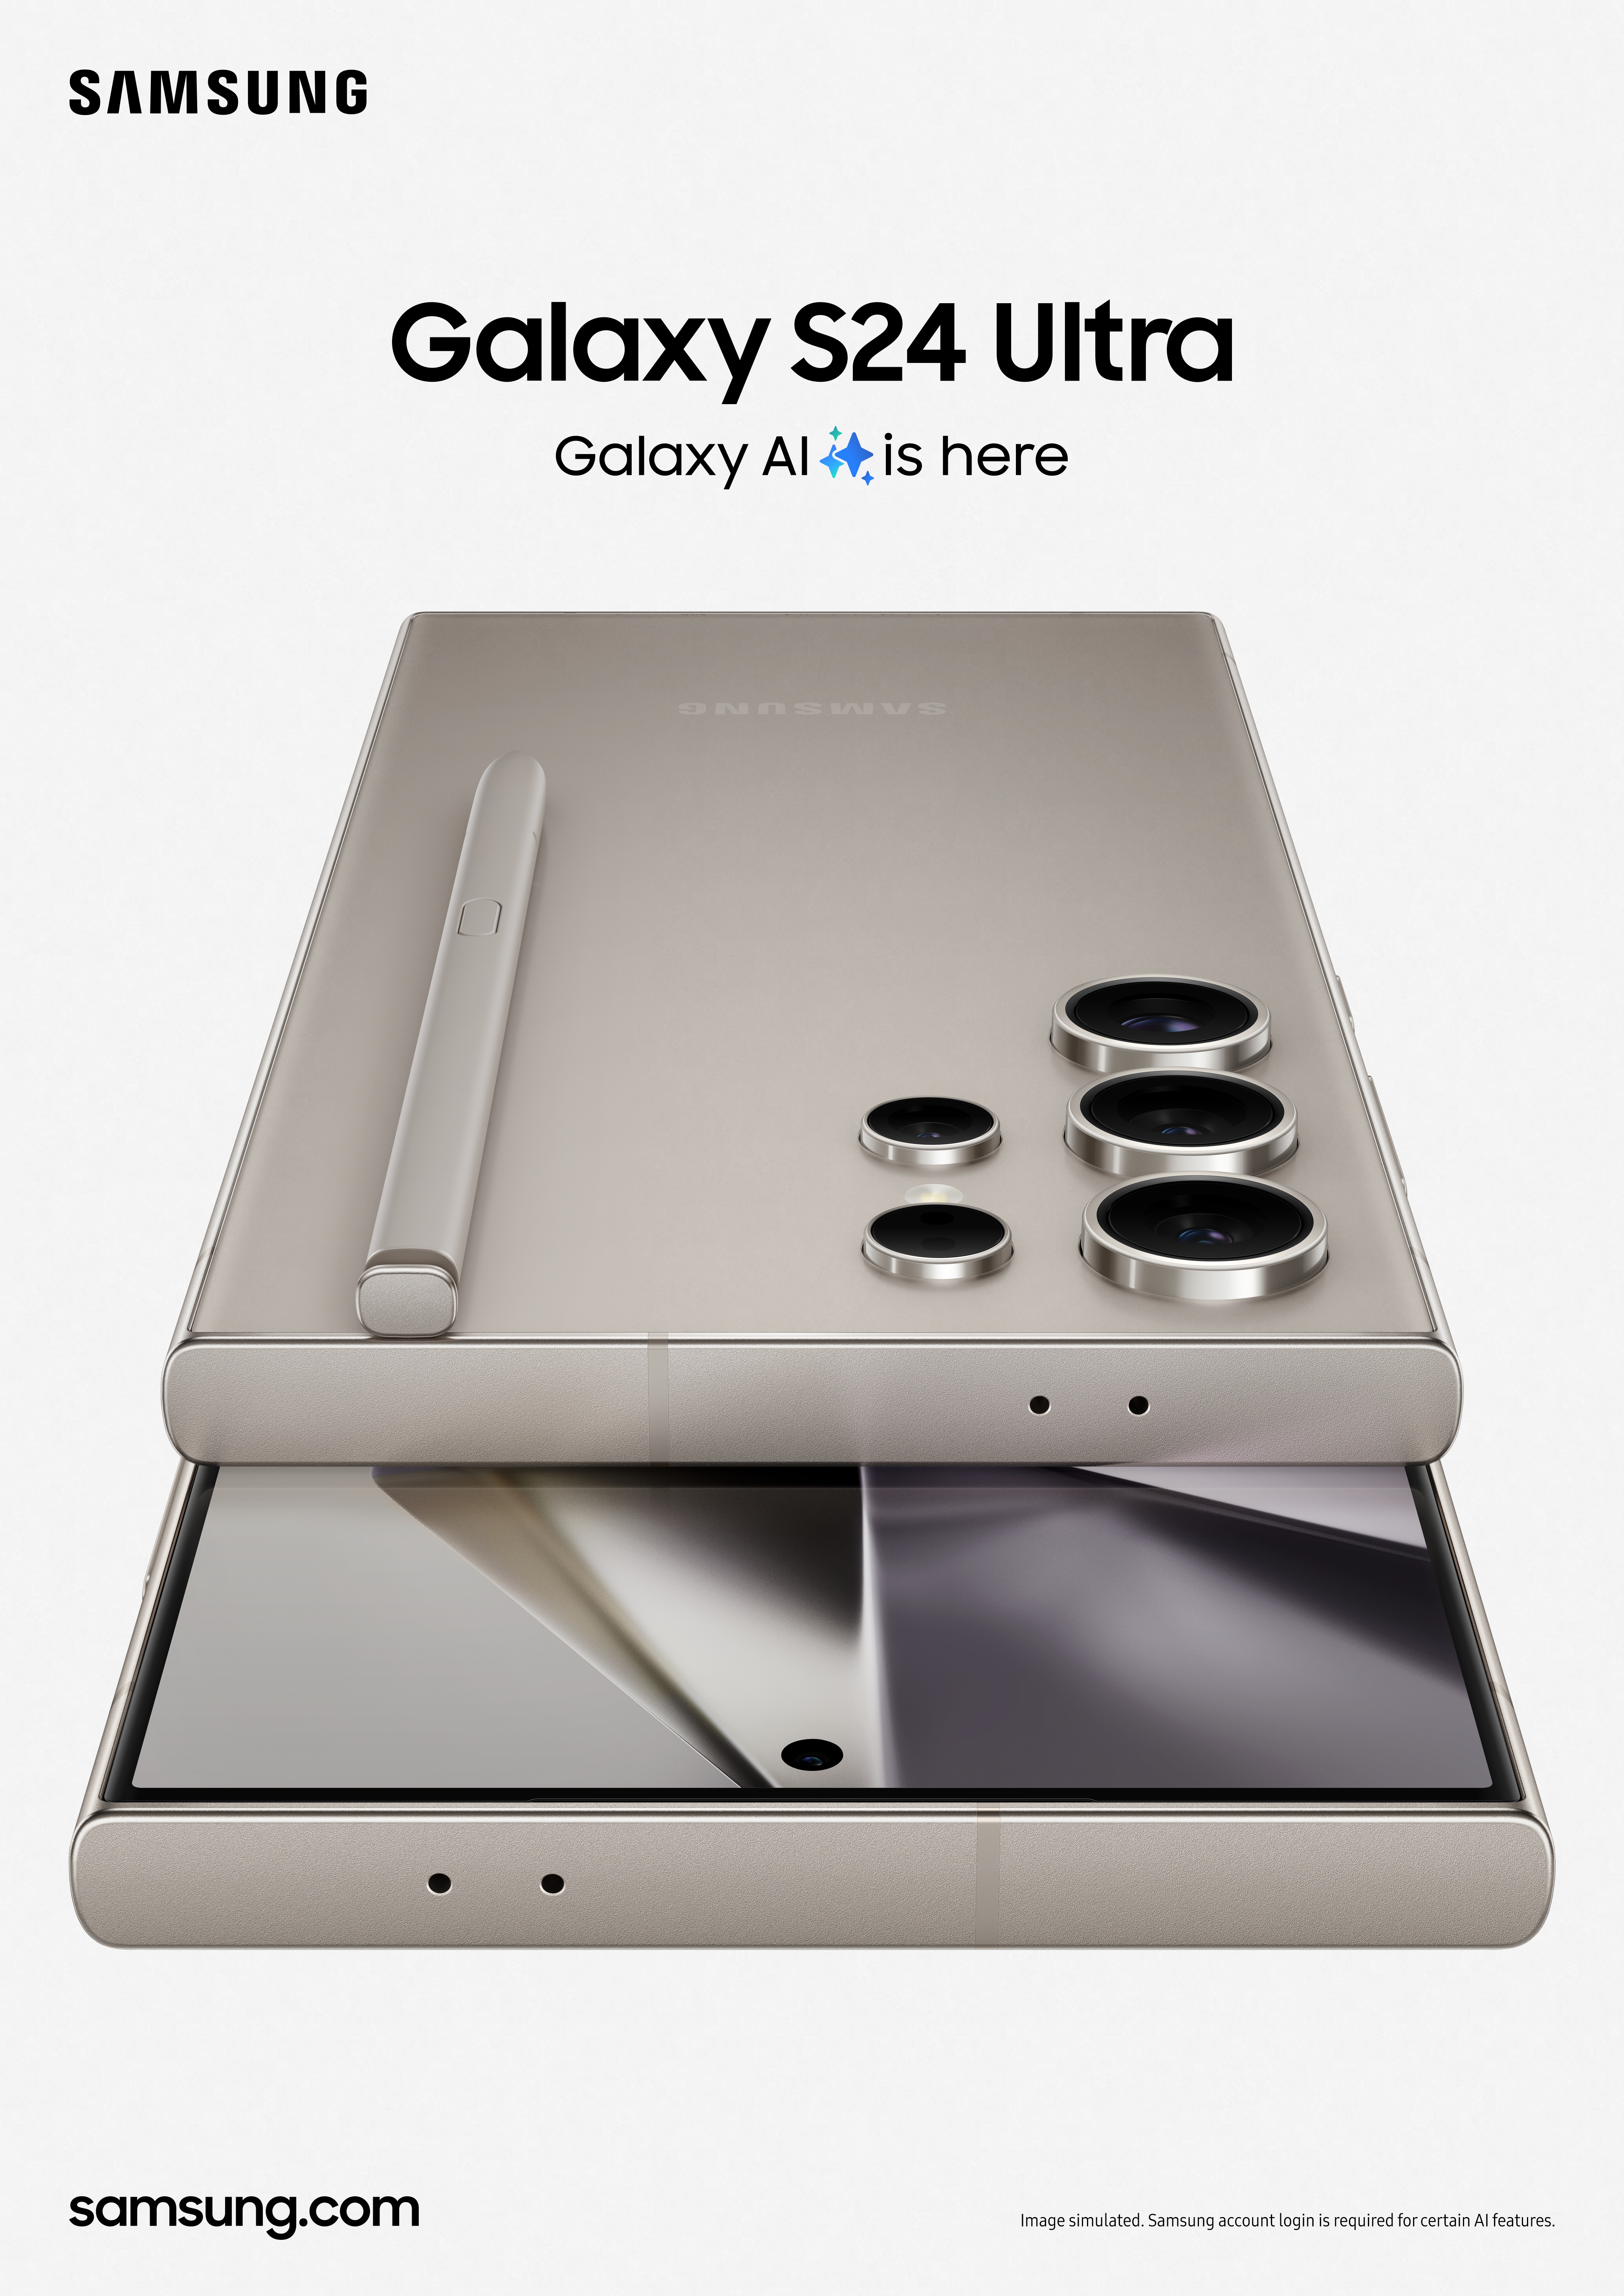 Introducing Samsung Galaxy SmartTag2: A Smart Way to Keep Track of  Valuables – Samsung Newsroom Australia